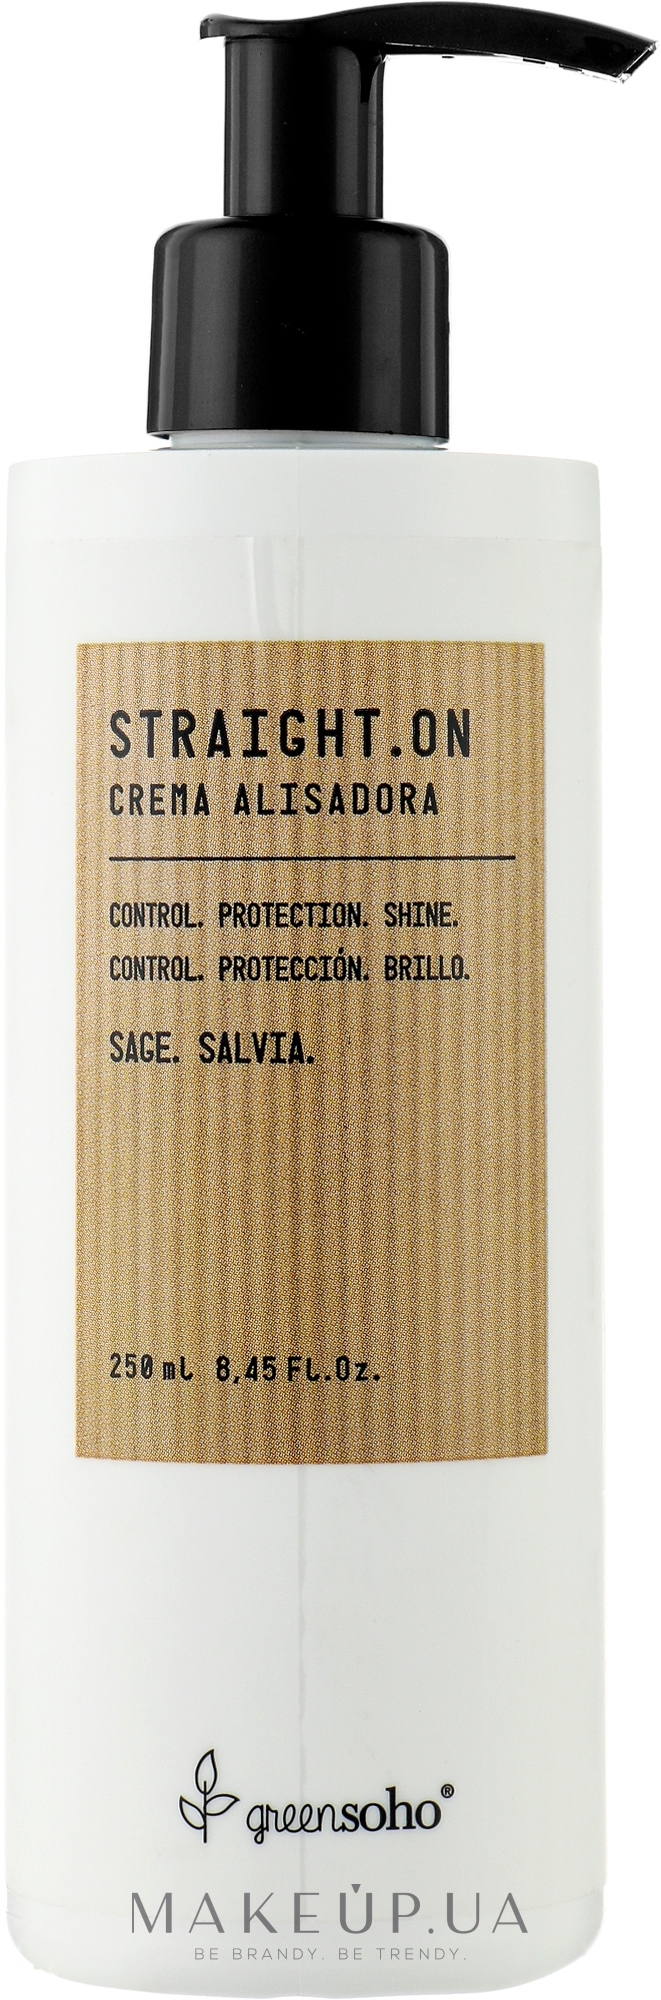 Разглаживающий крем для волос - Greensoho Straight.On Cream — фото 250ml